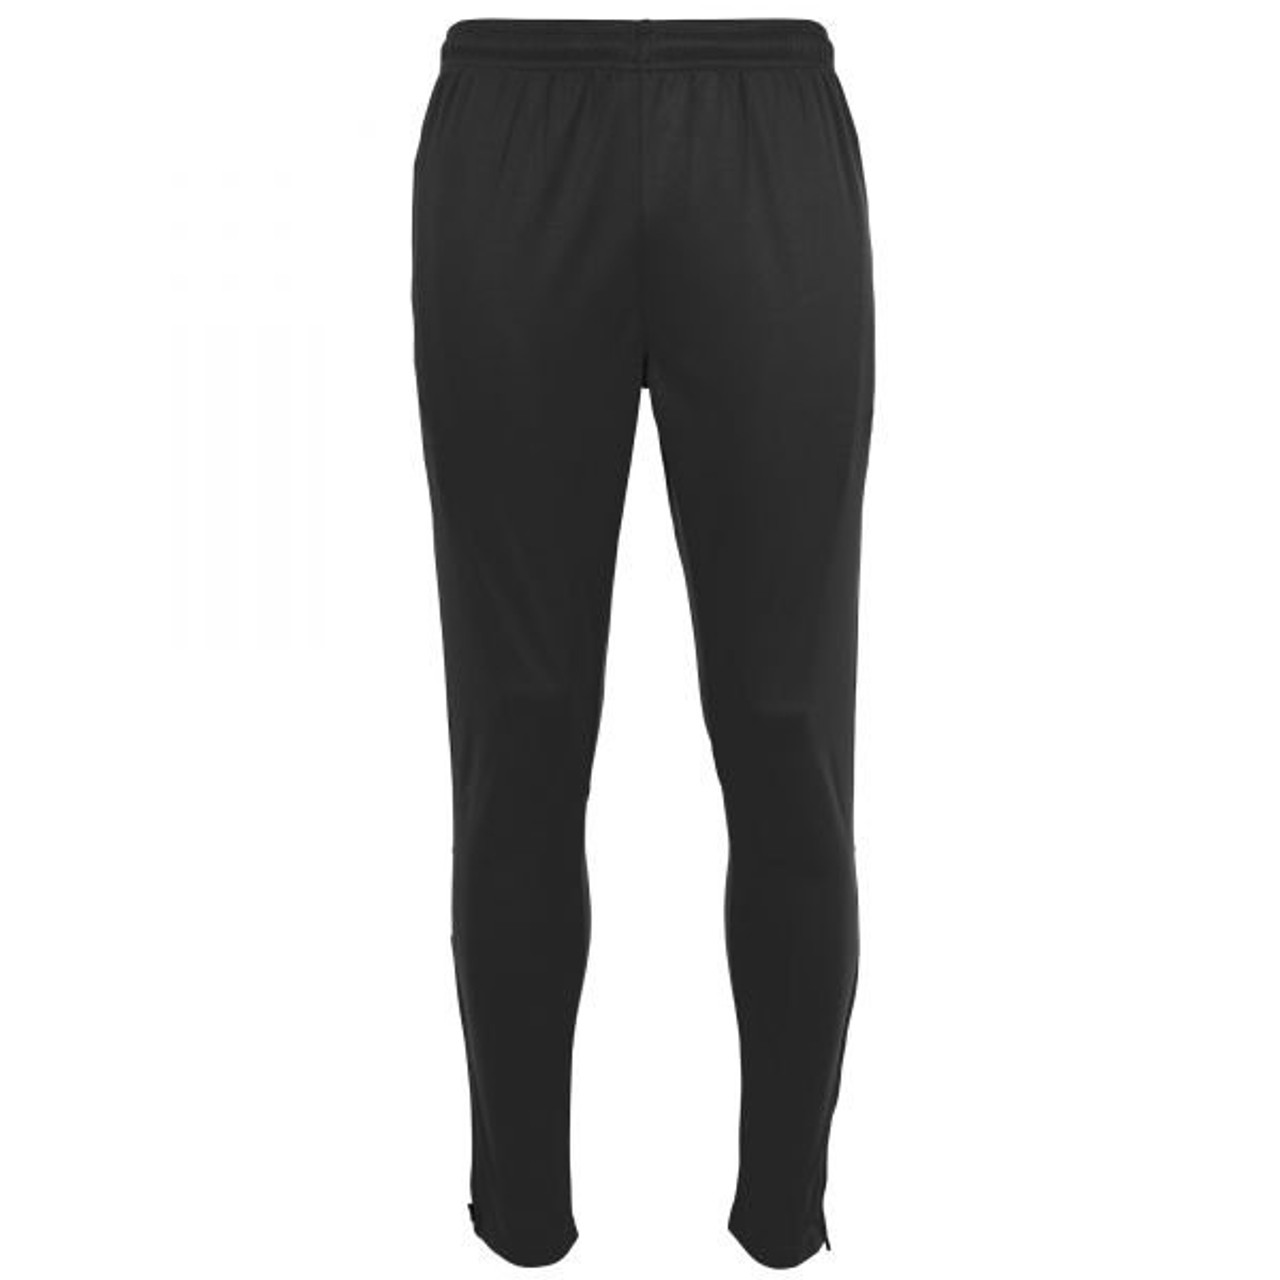 First Pants Black ADULT - Only Sport Ltd